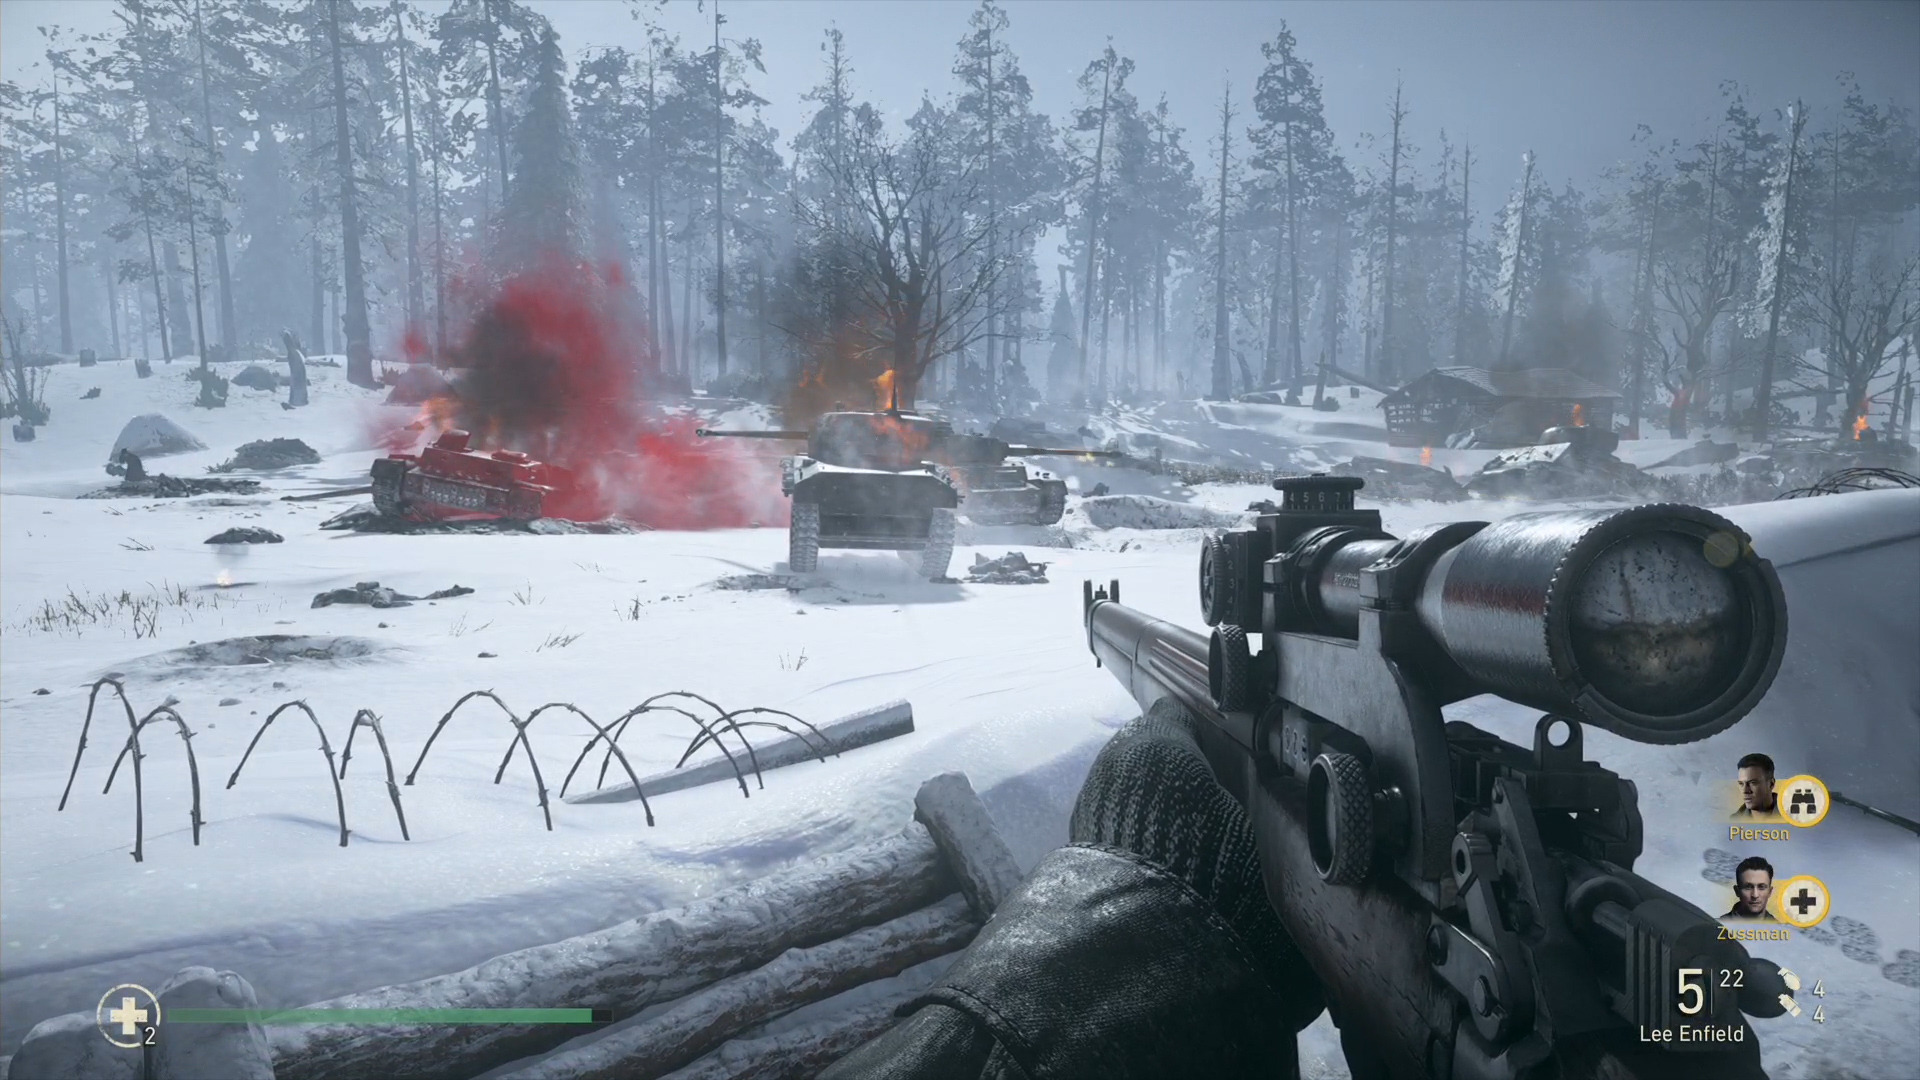 Of Duty: Review - GameSpot